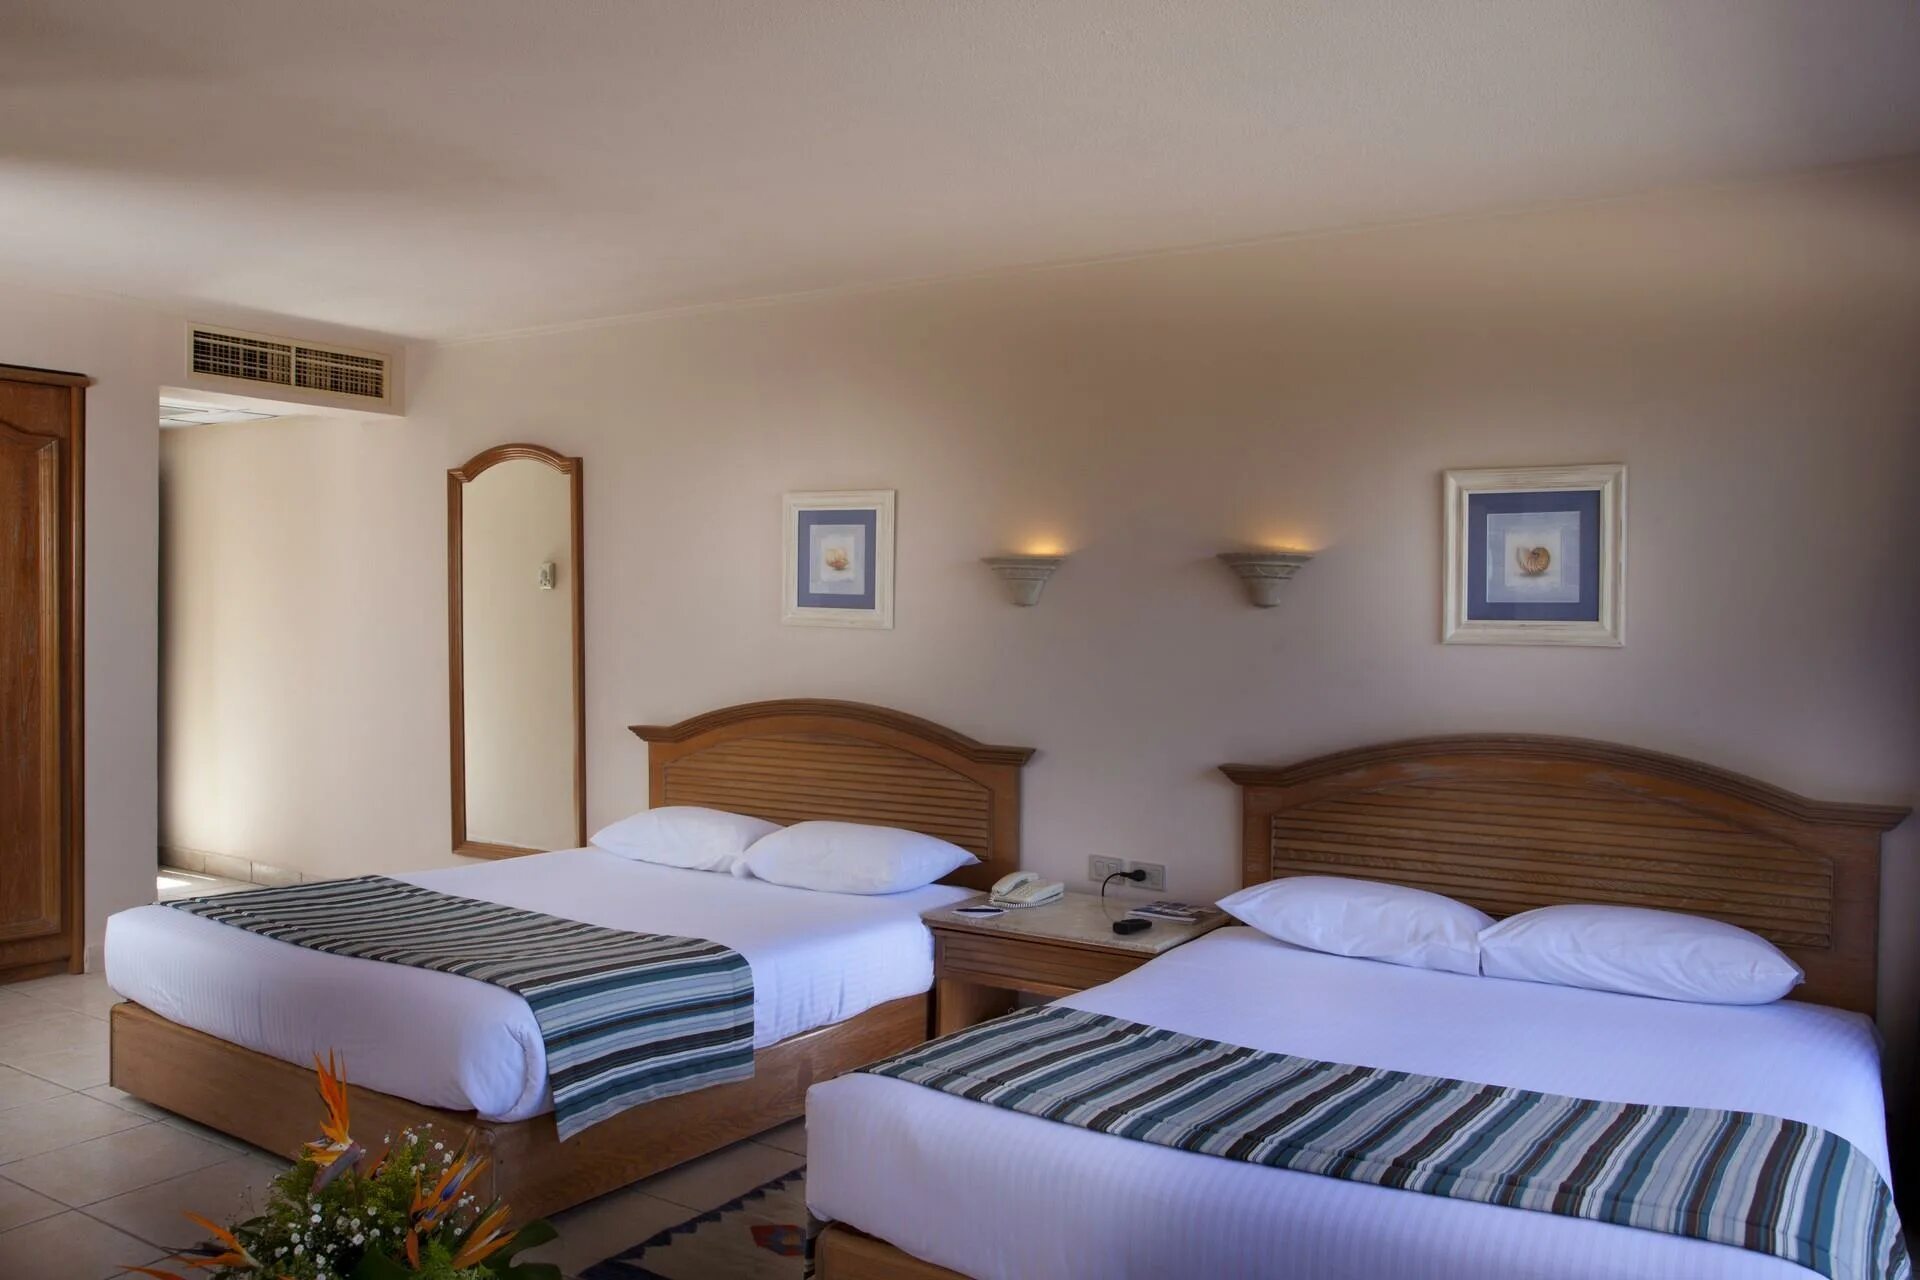 Coral beach rotana resort 4. Отель Coral Beach Hotel Hurghada. Корал Бич Хургада. Coral Beach Hotel Hurghada 4. Египет Хургада отель Корал Бич Резорт 4 звезды.